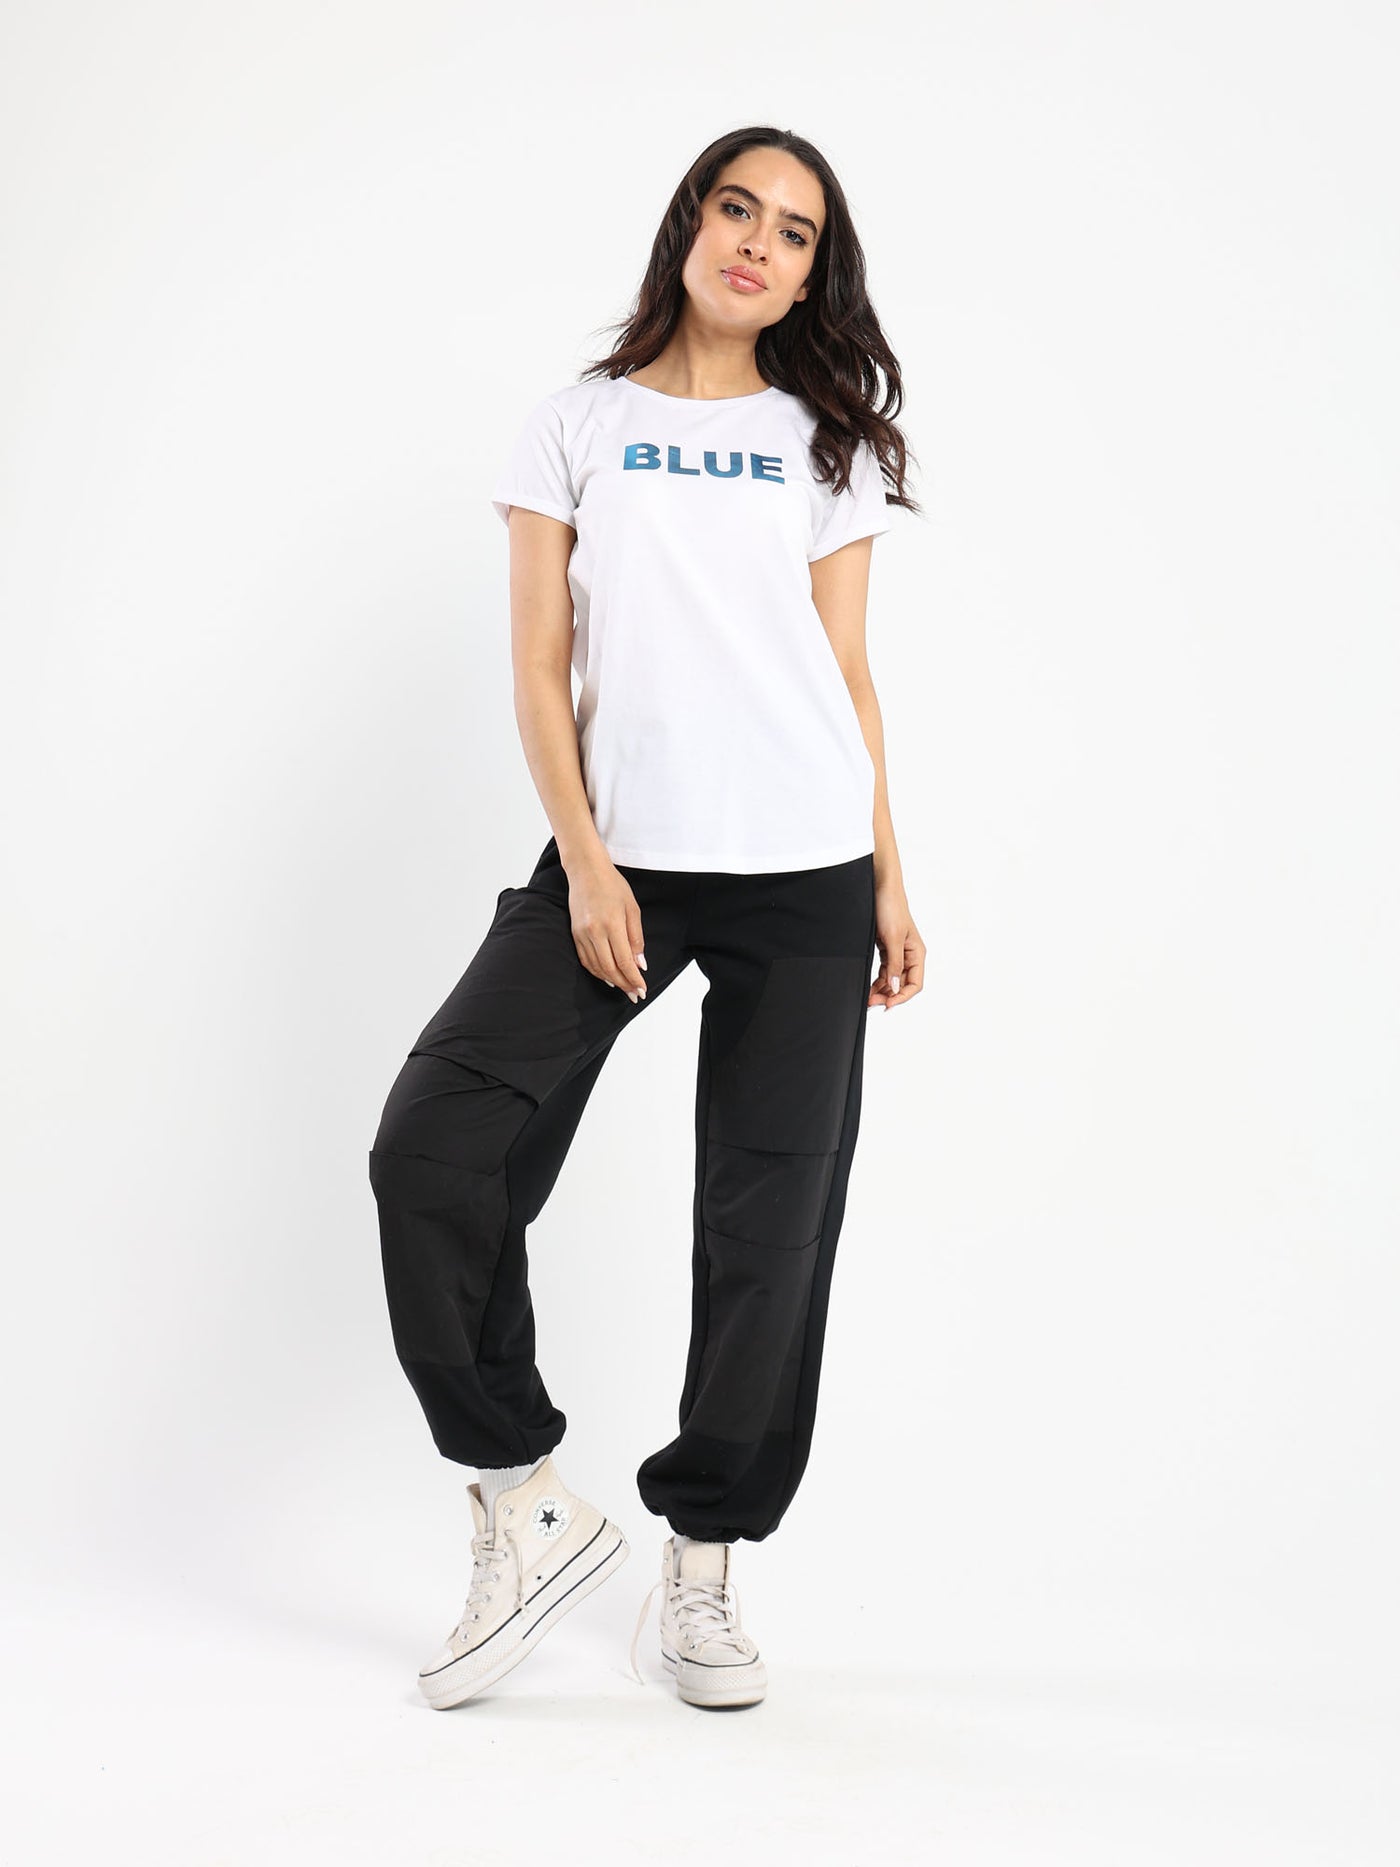 T-Shirt - "Blue" Print